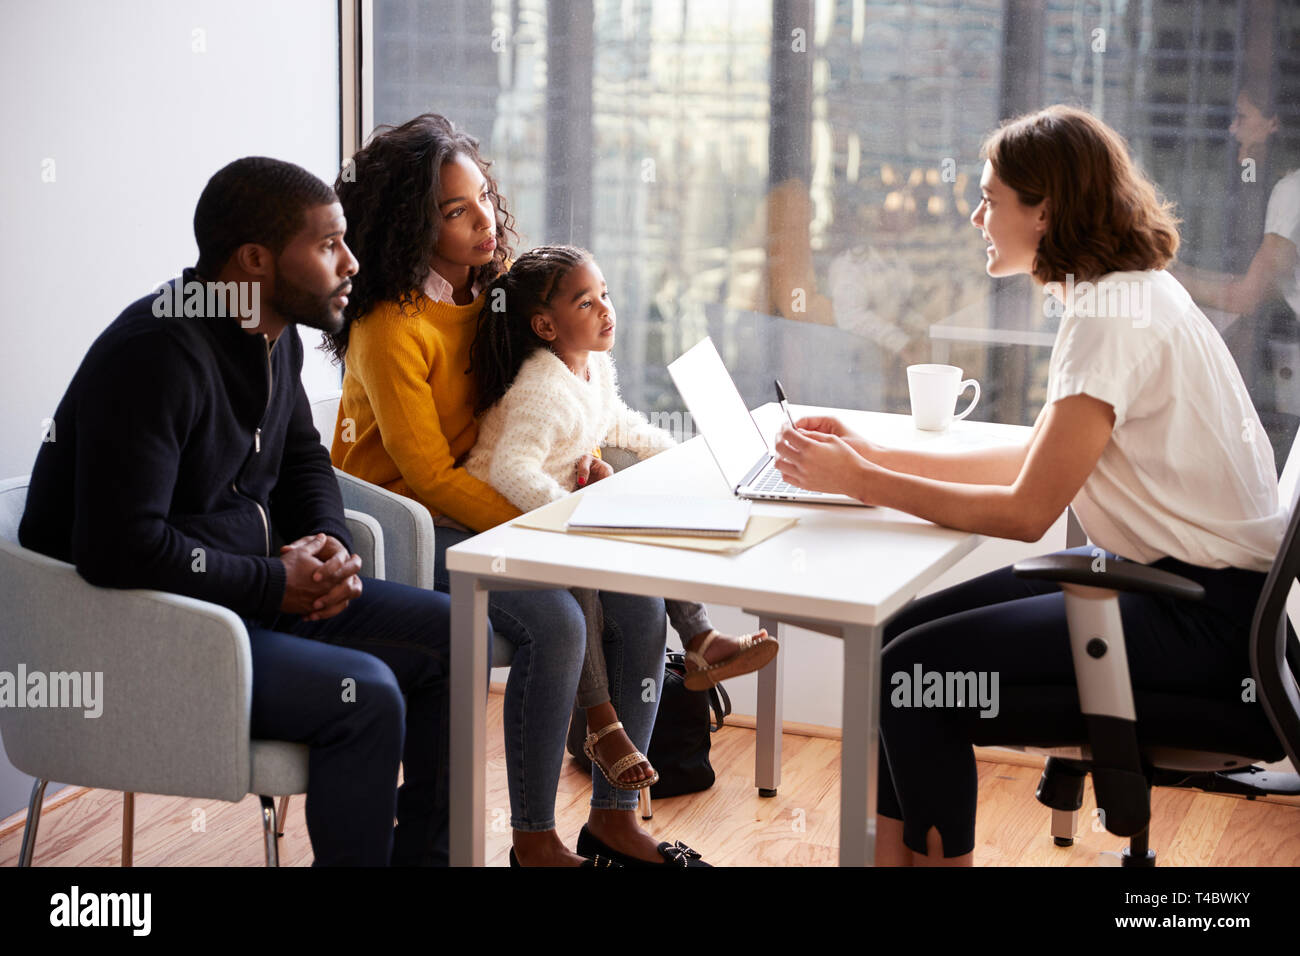 Family Having Consultation With Female Pediatrician In Hospital Office Stock Photo